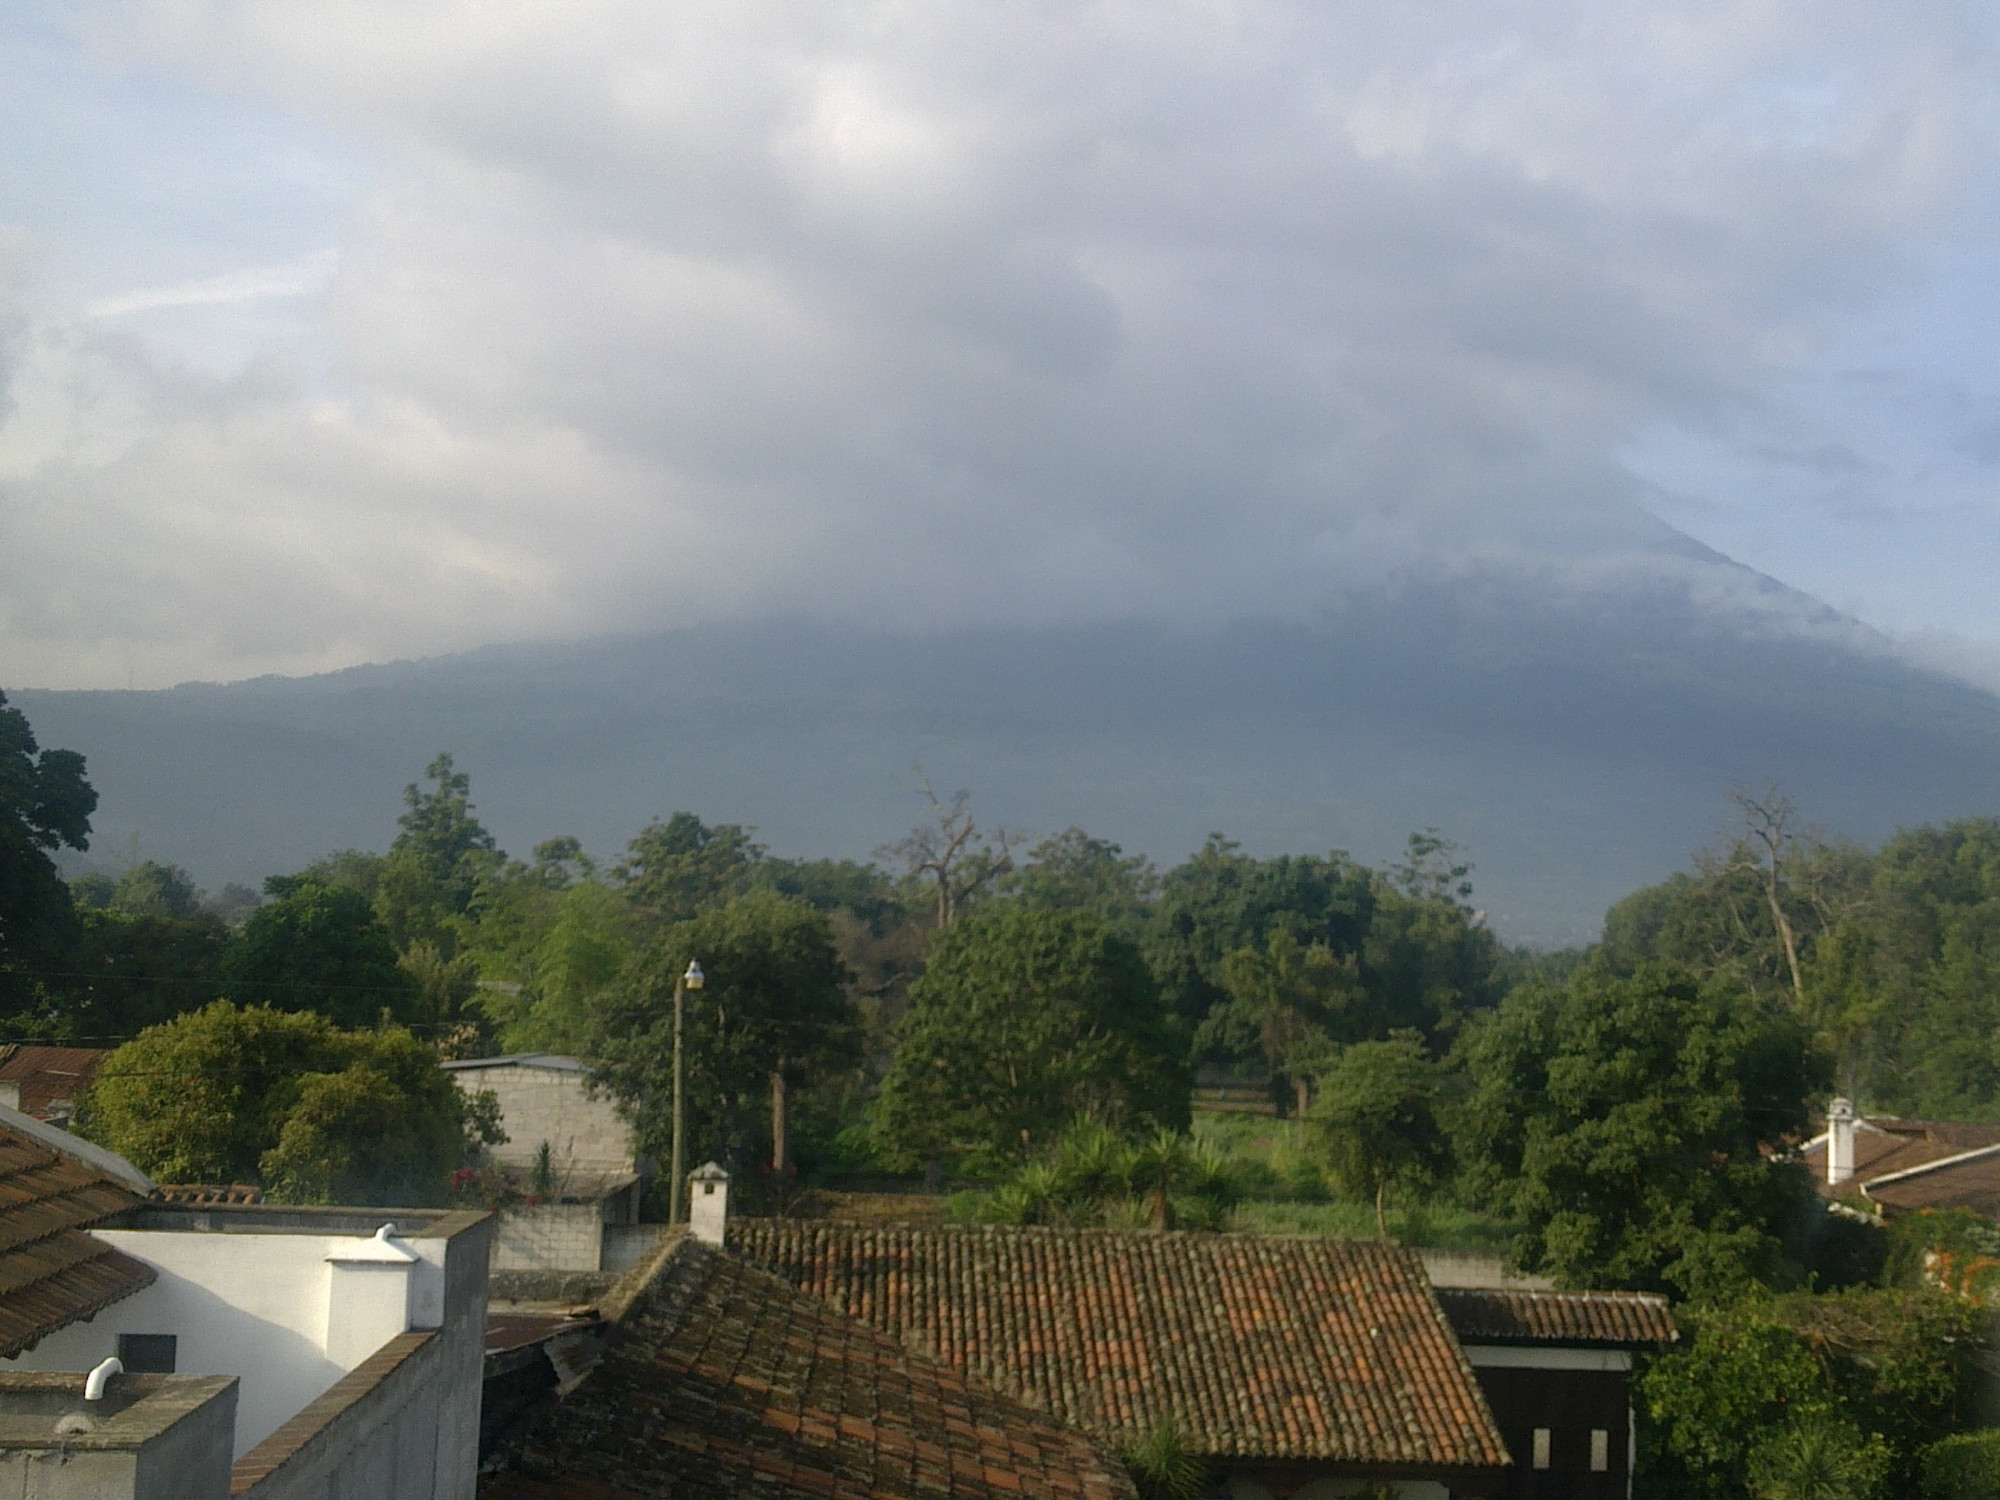 Villa Esthela (Antigua, Guatemala)